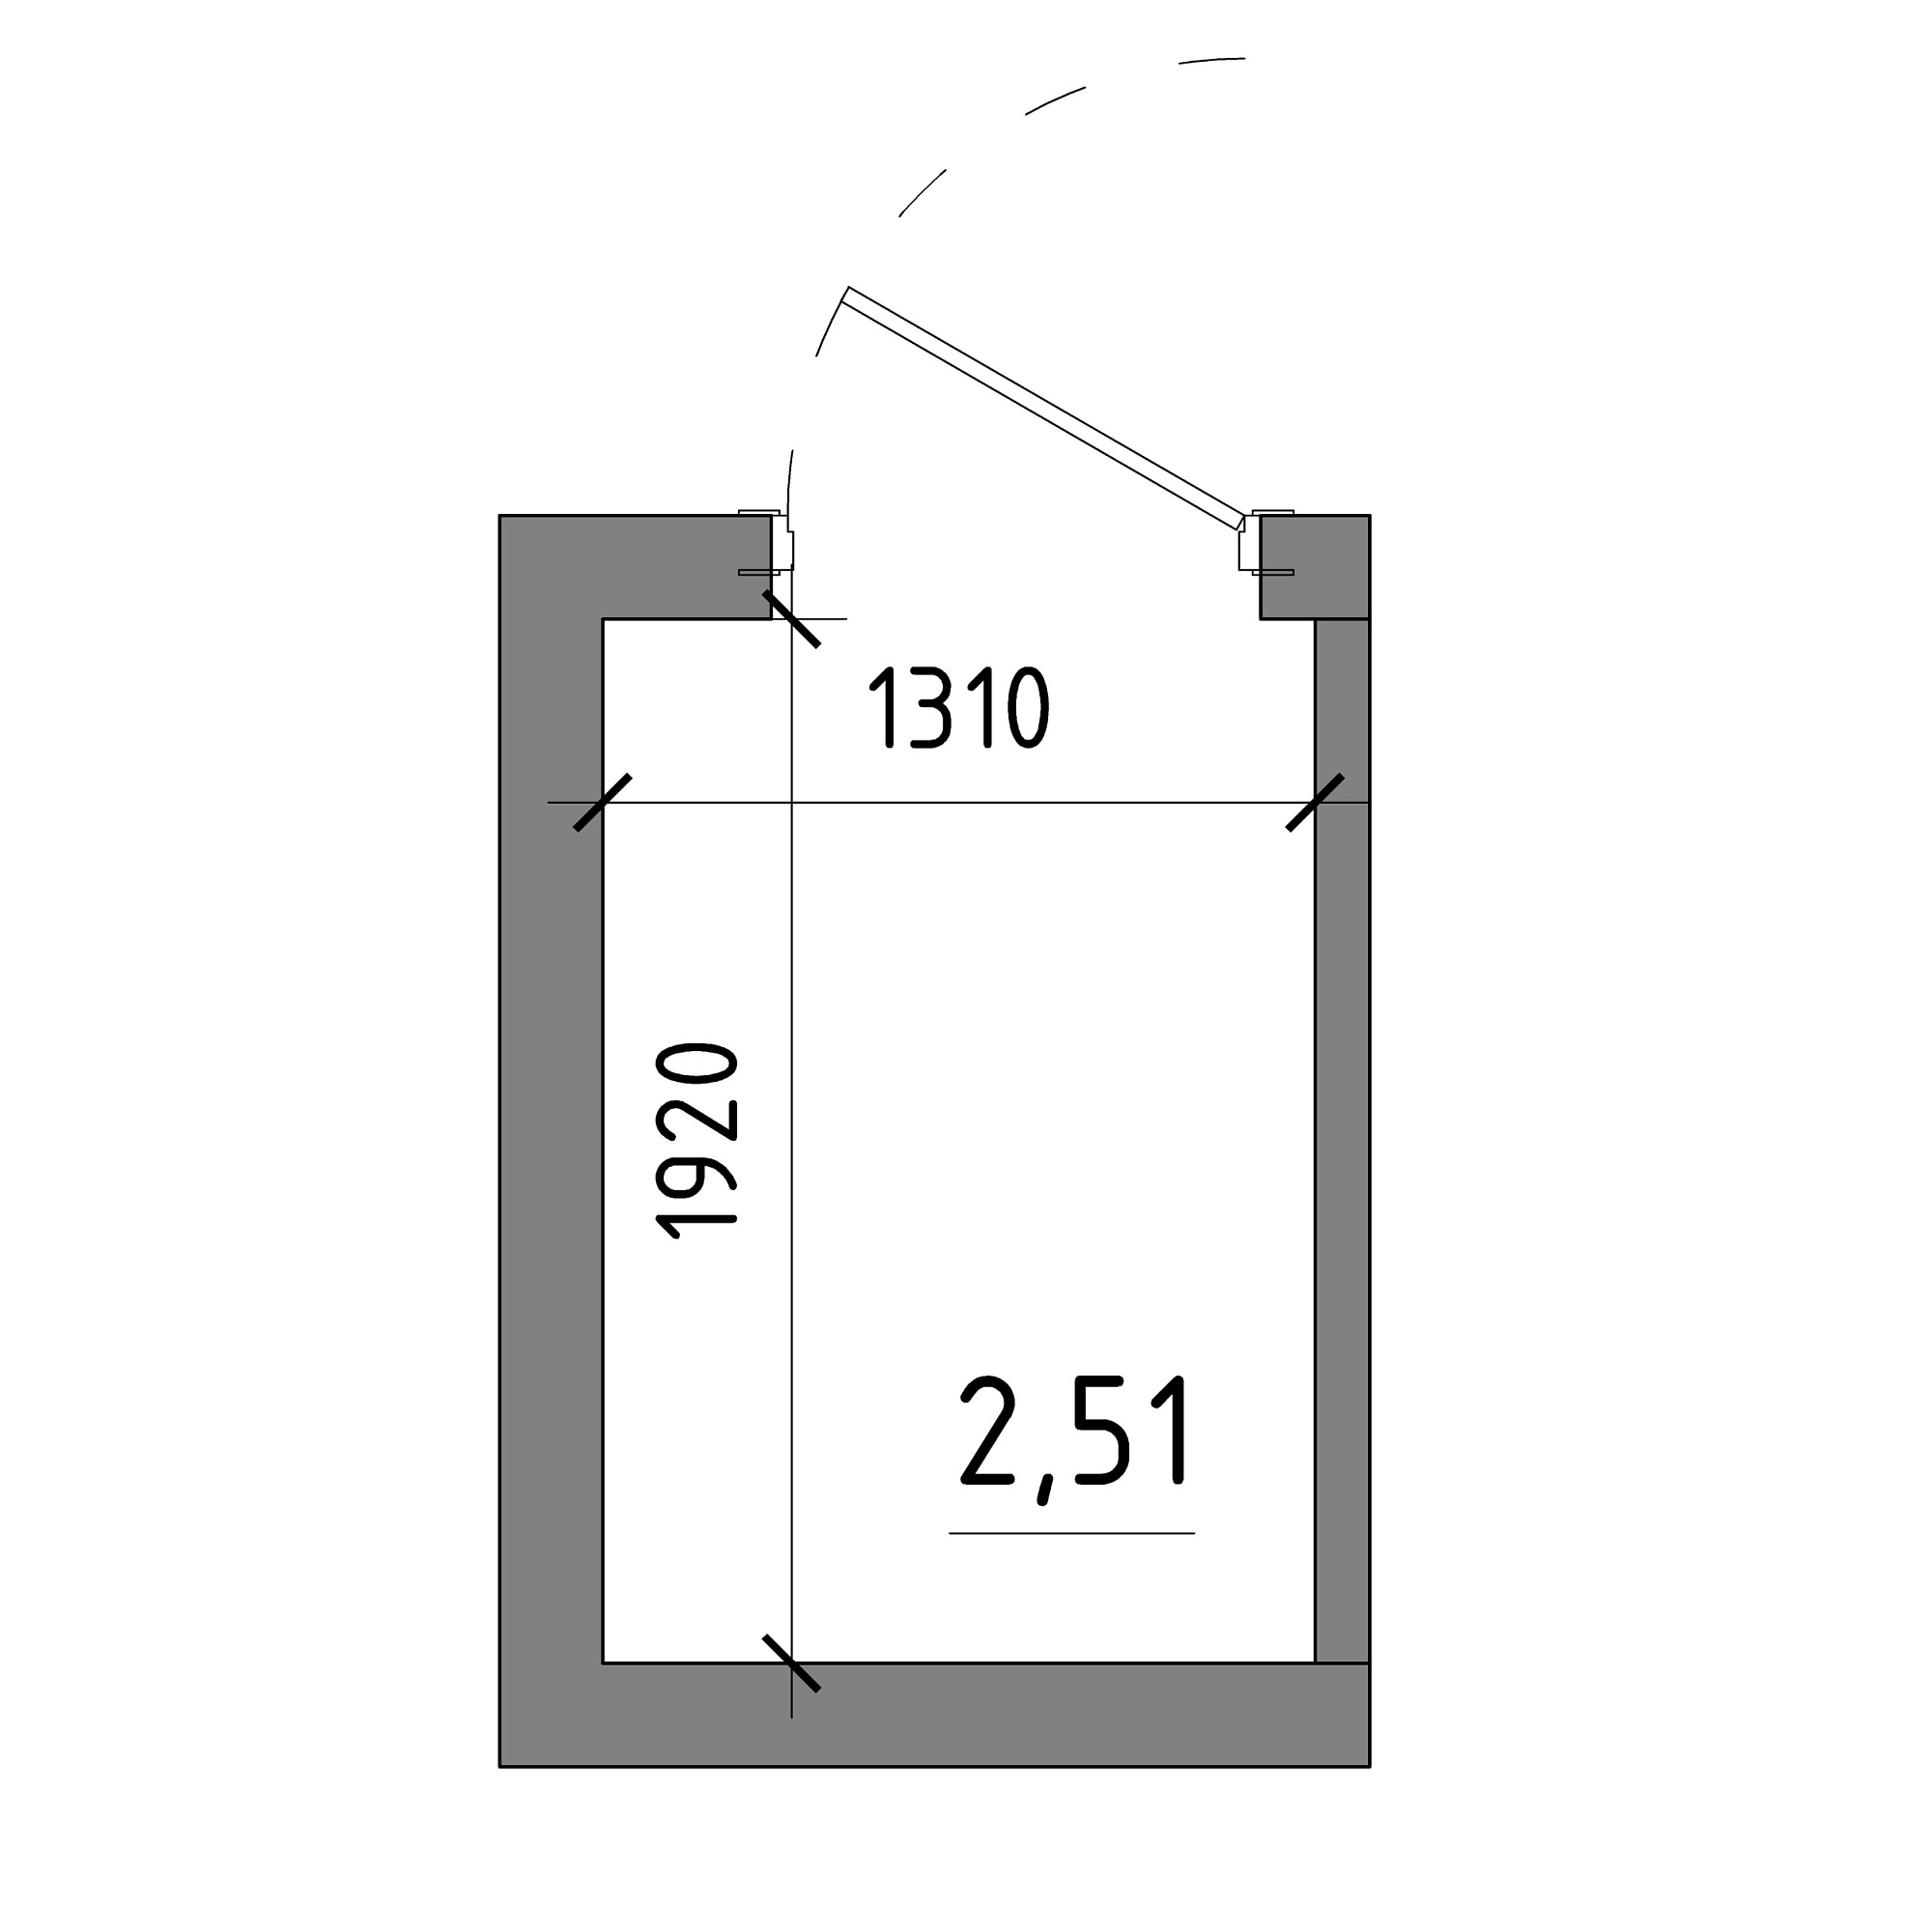 Planning Storeroom area 2.51m2, AB-17-09/К0002.